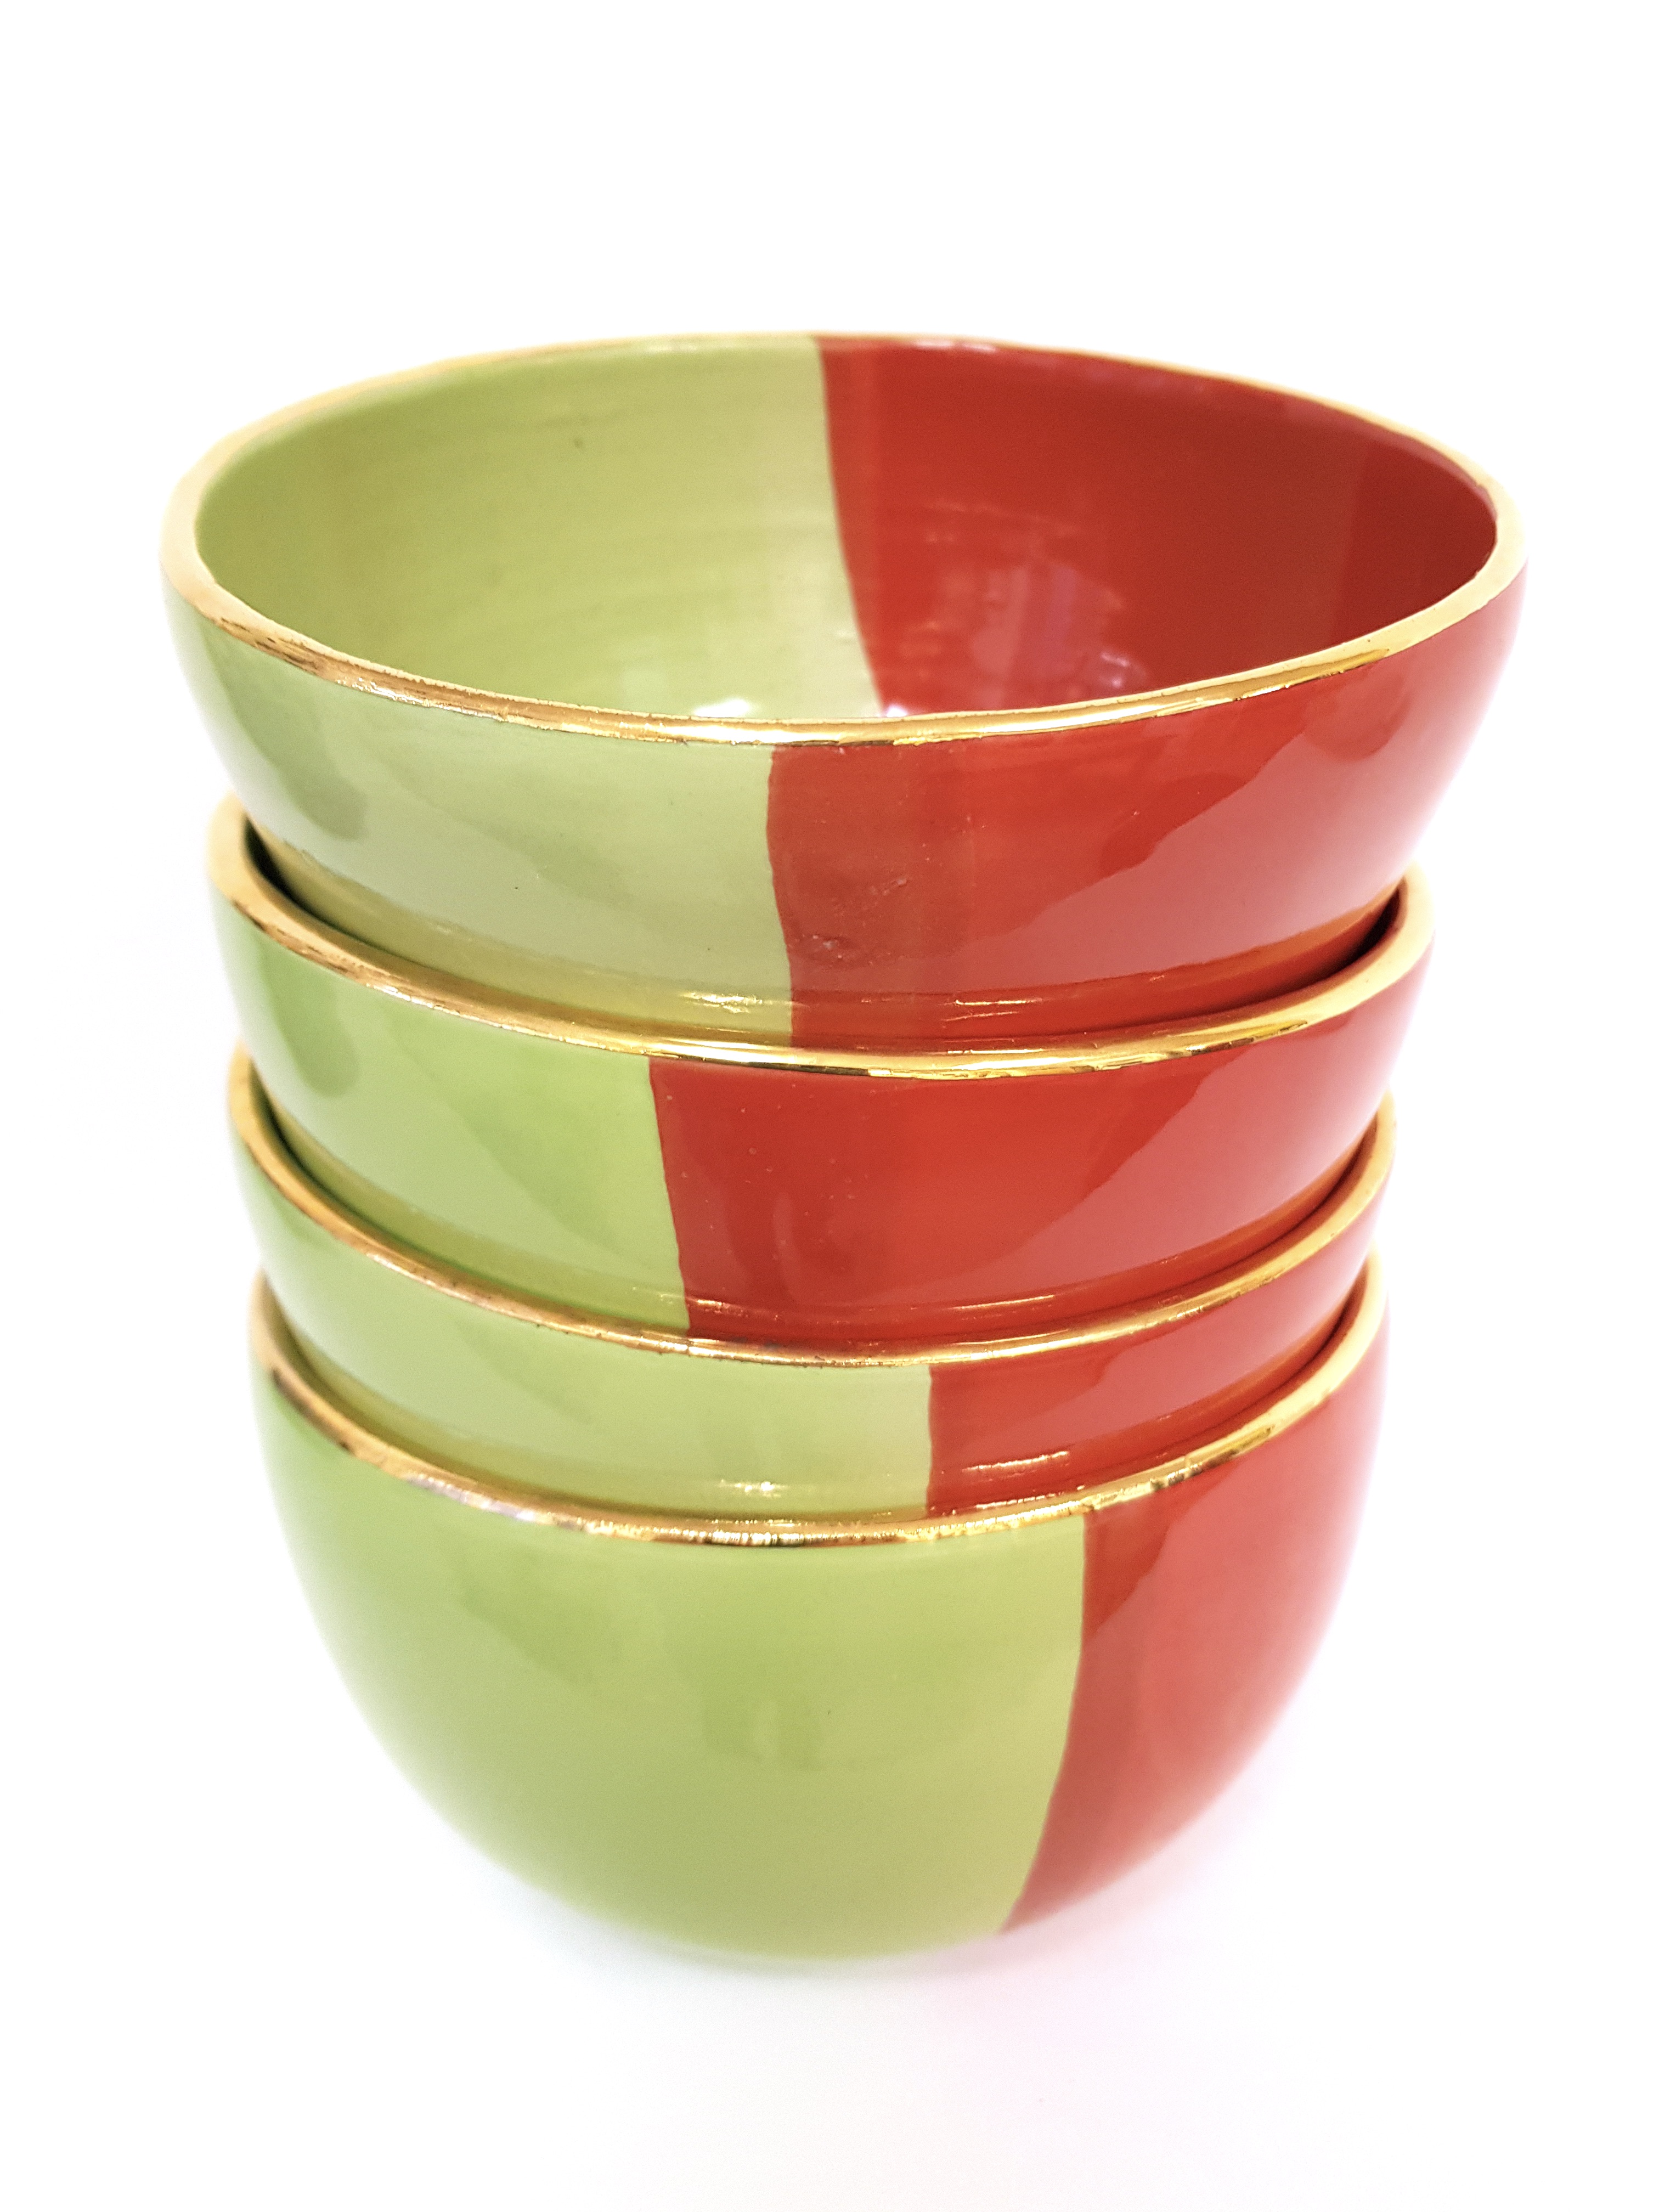 Keramik-Bowl, Unikat, Töpferei la ceramica Basel, Shop, Keramik